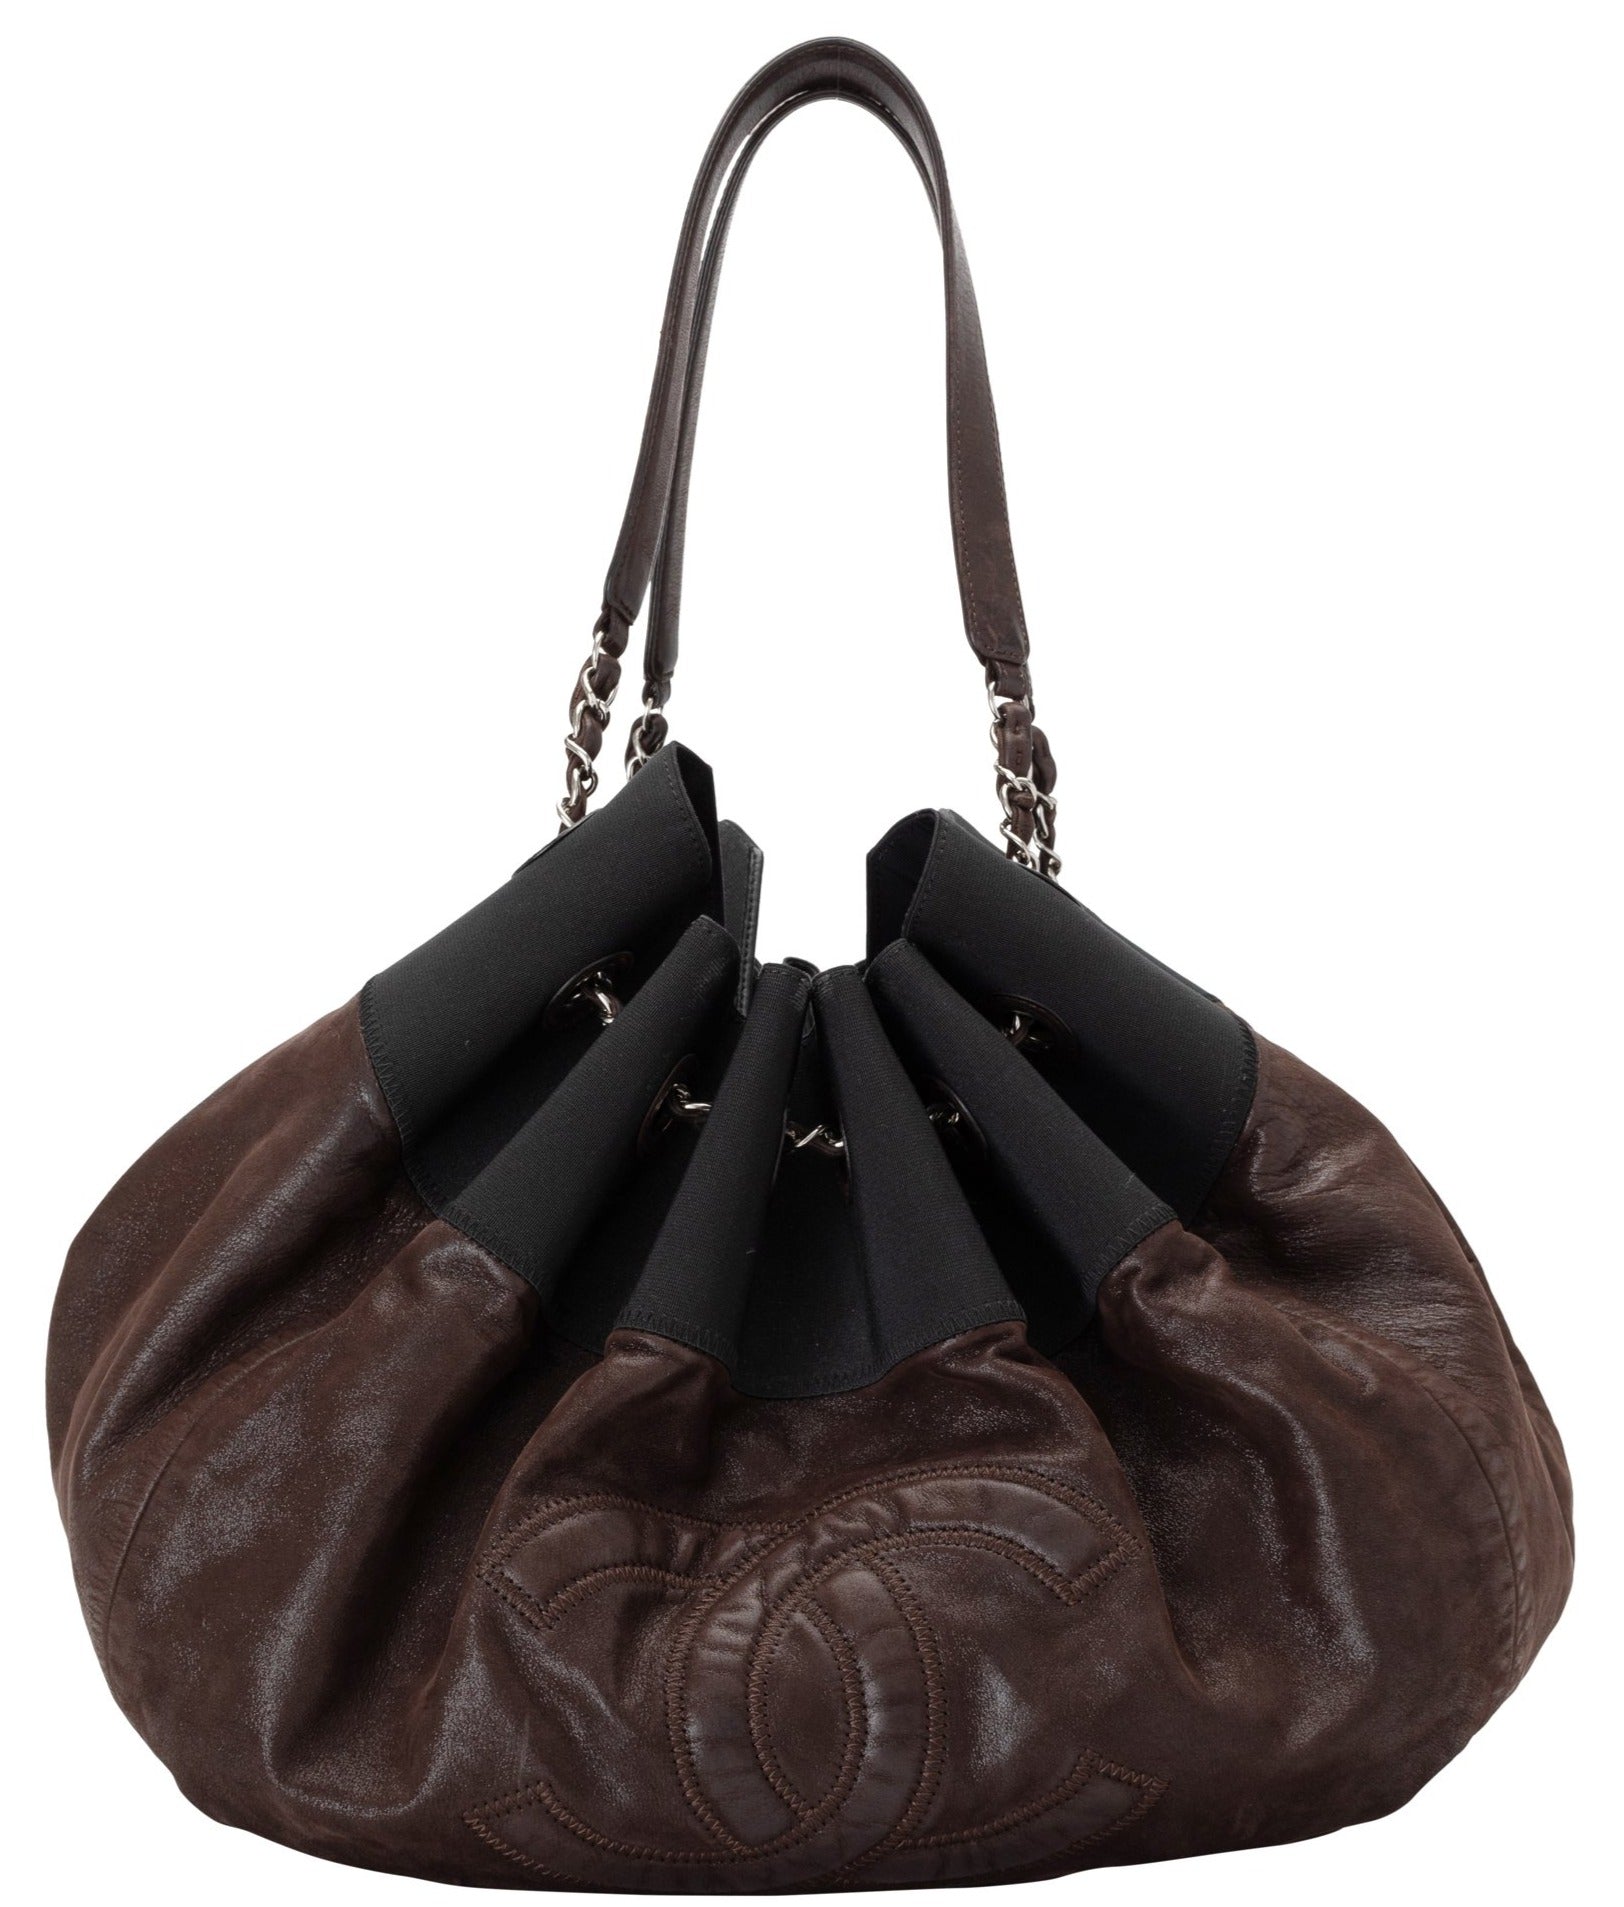 Chanel Hobo Handbag in Black Leather